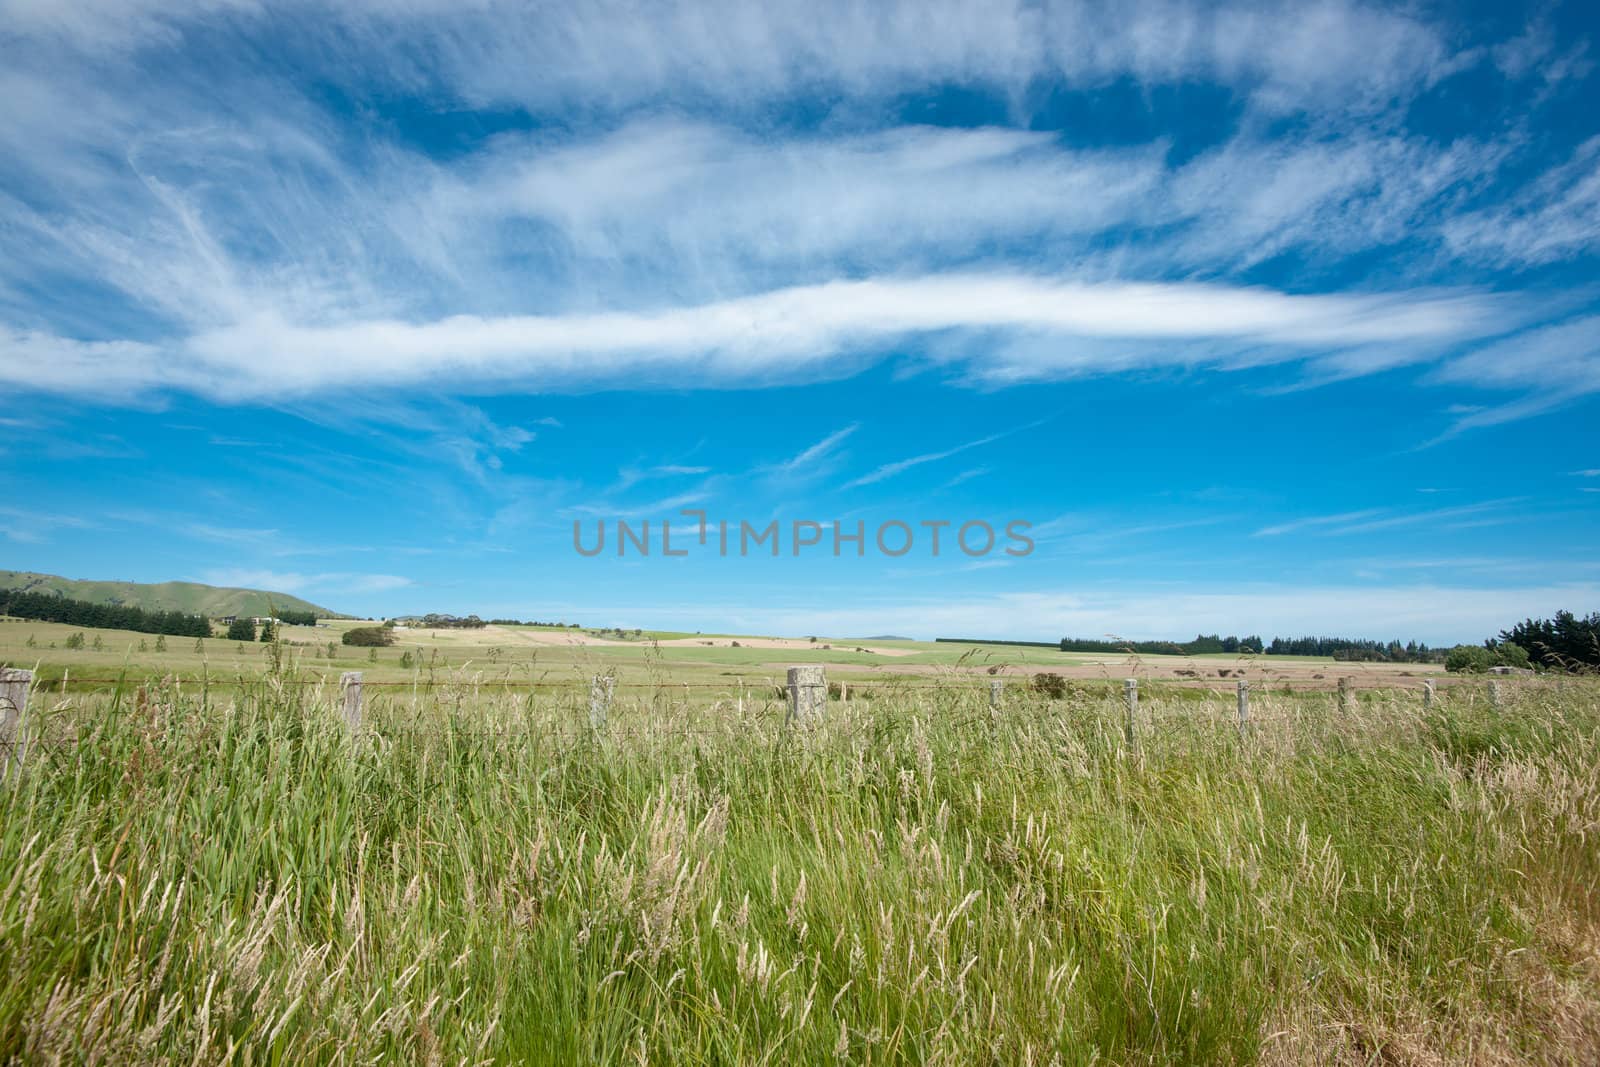 Cloudscape creates an interesting pattern over rural fields.